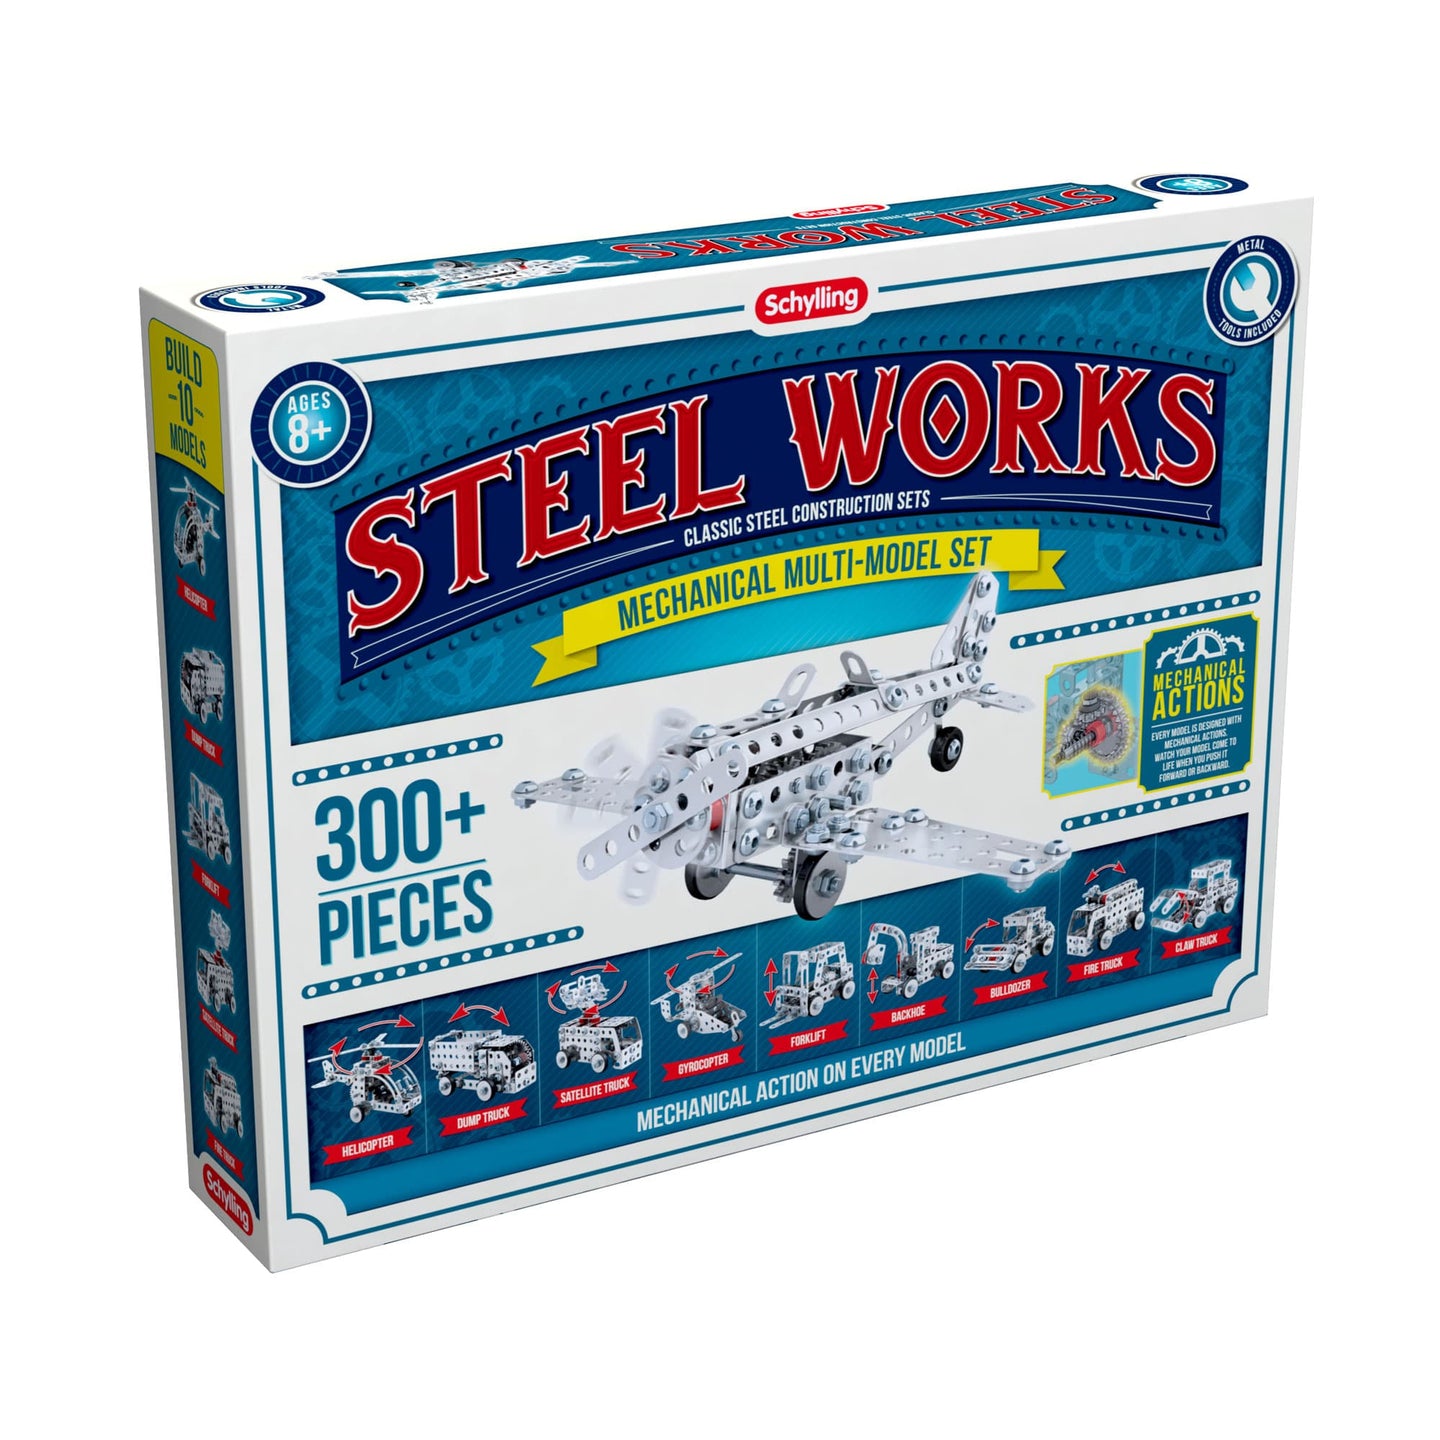 steel works mechanical multi-model set